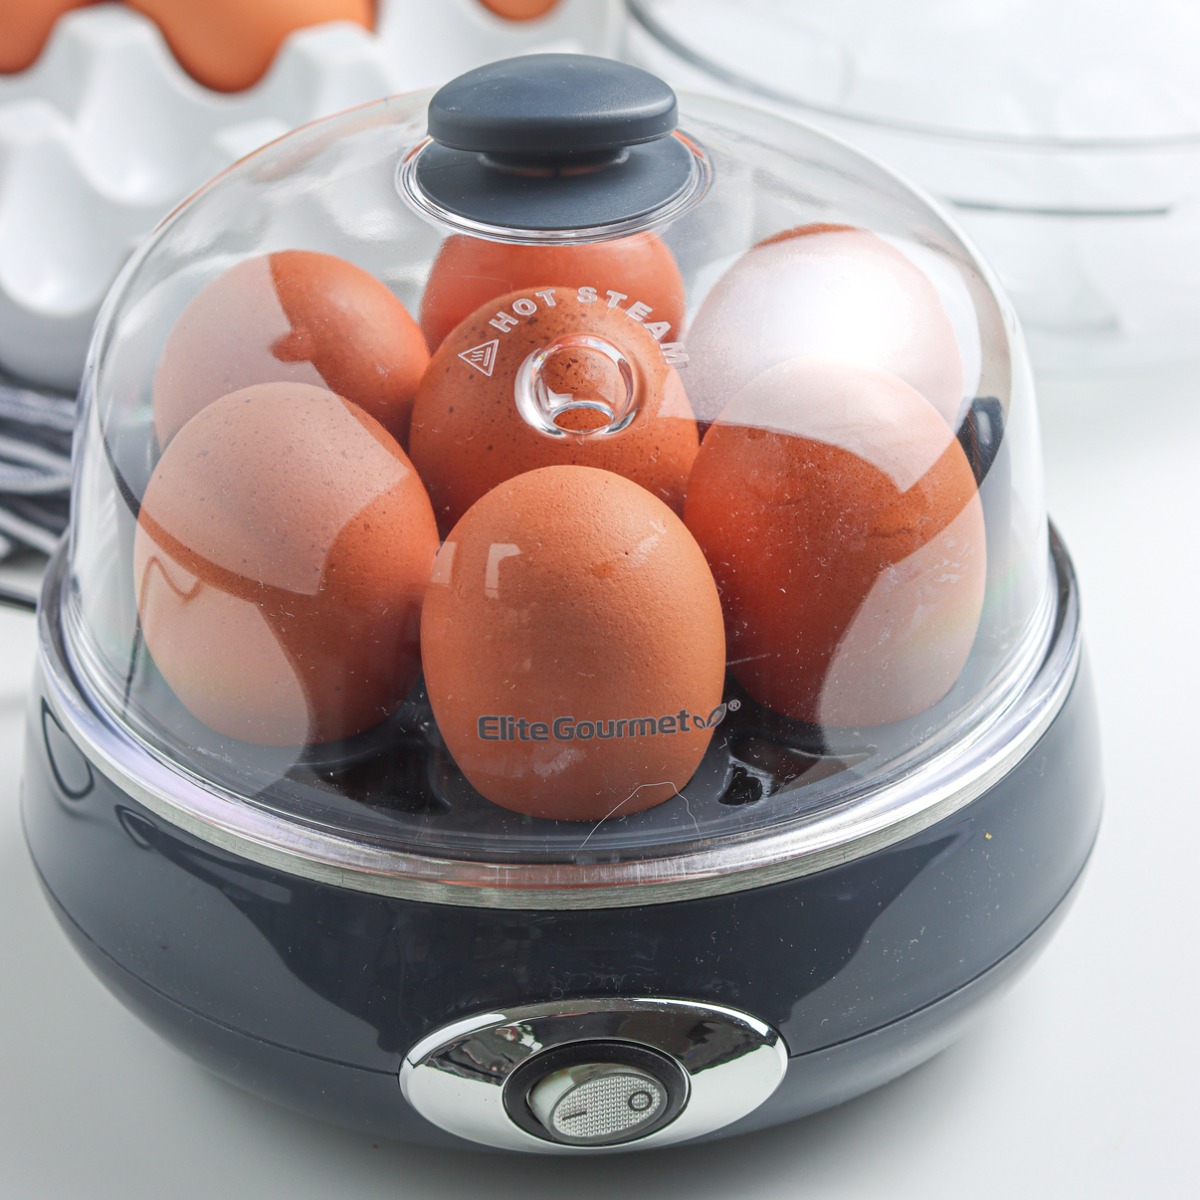 Dash 7-Egg Everyday Egg Cooker, Black